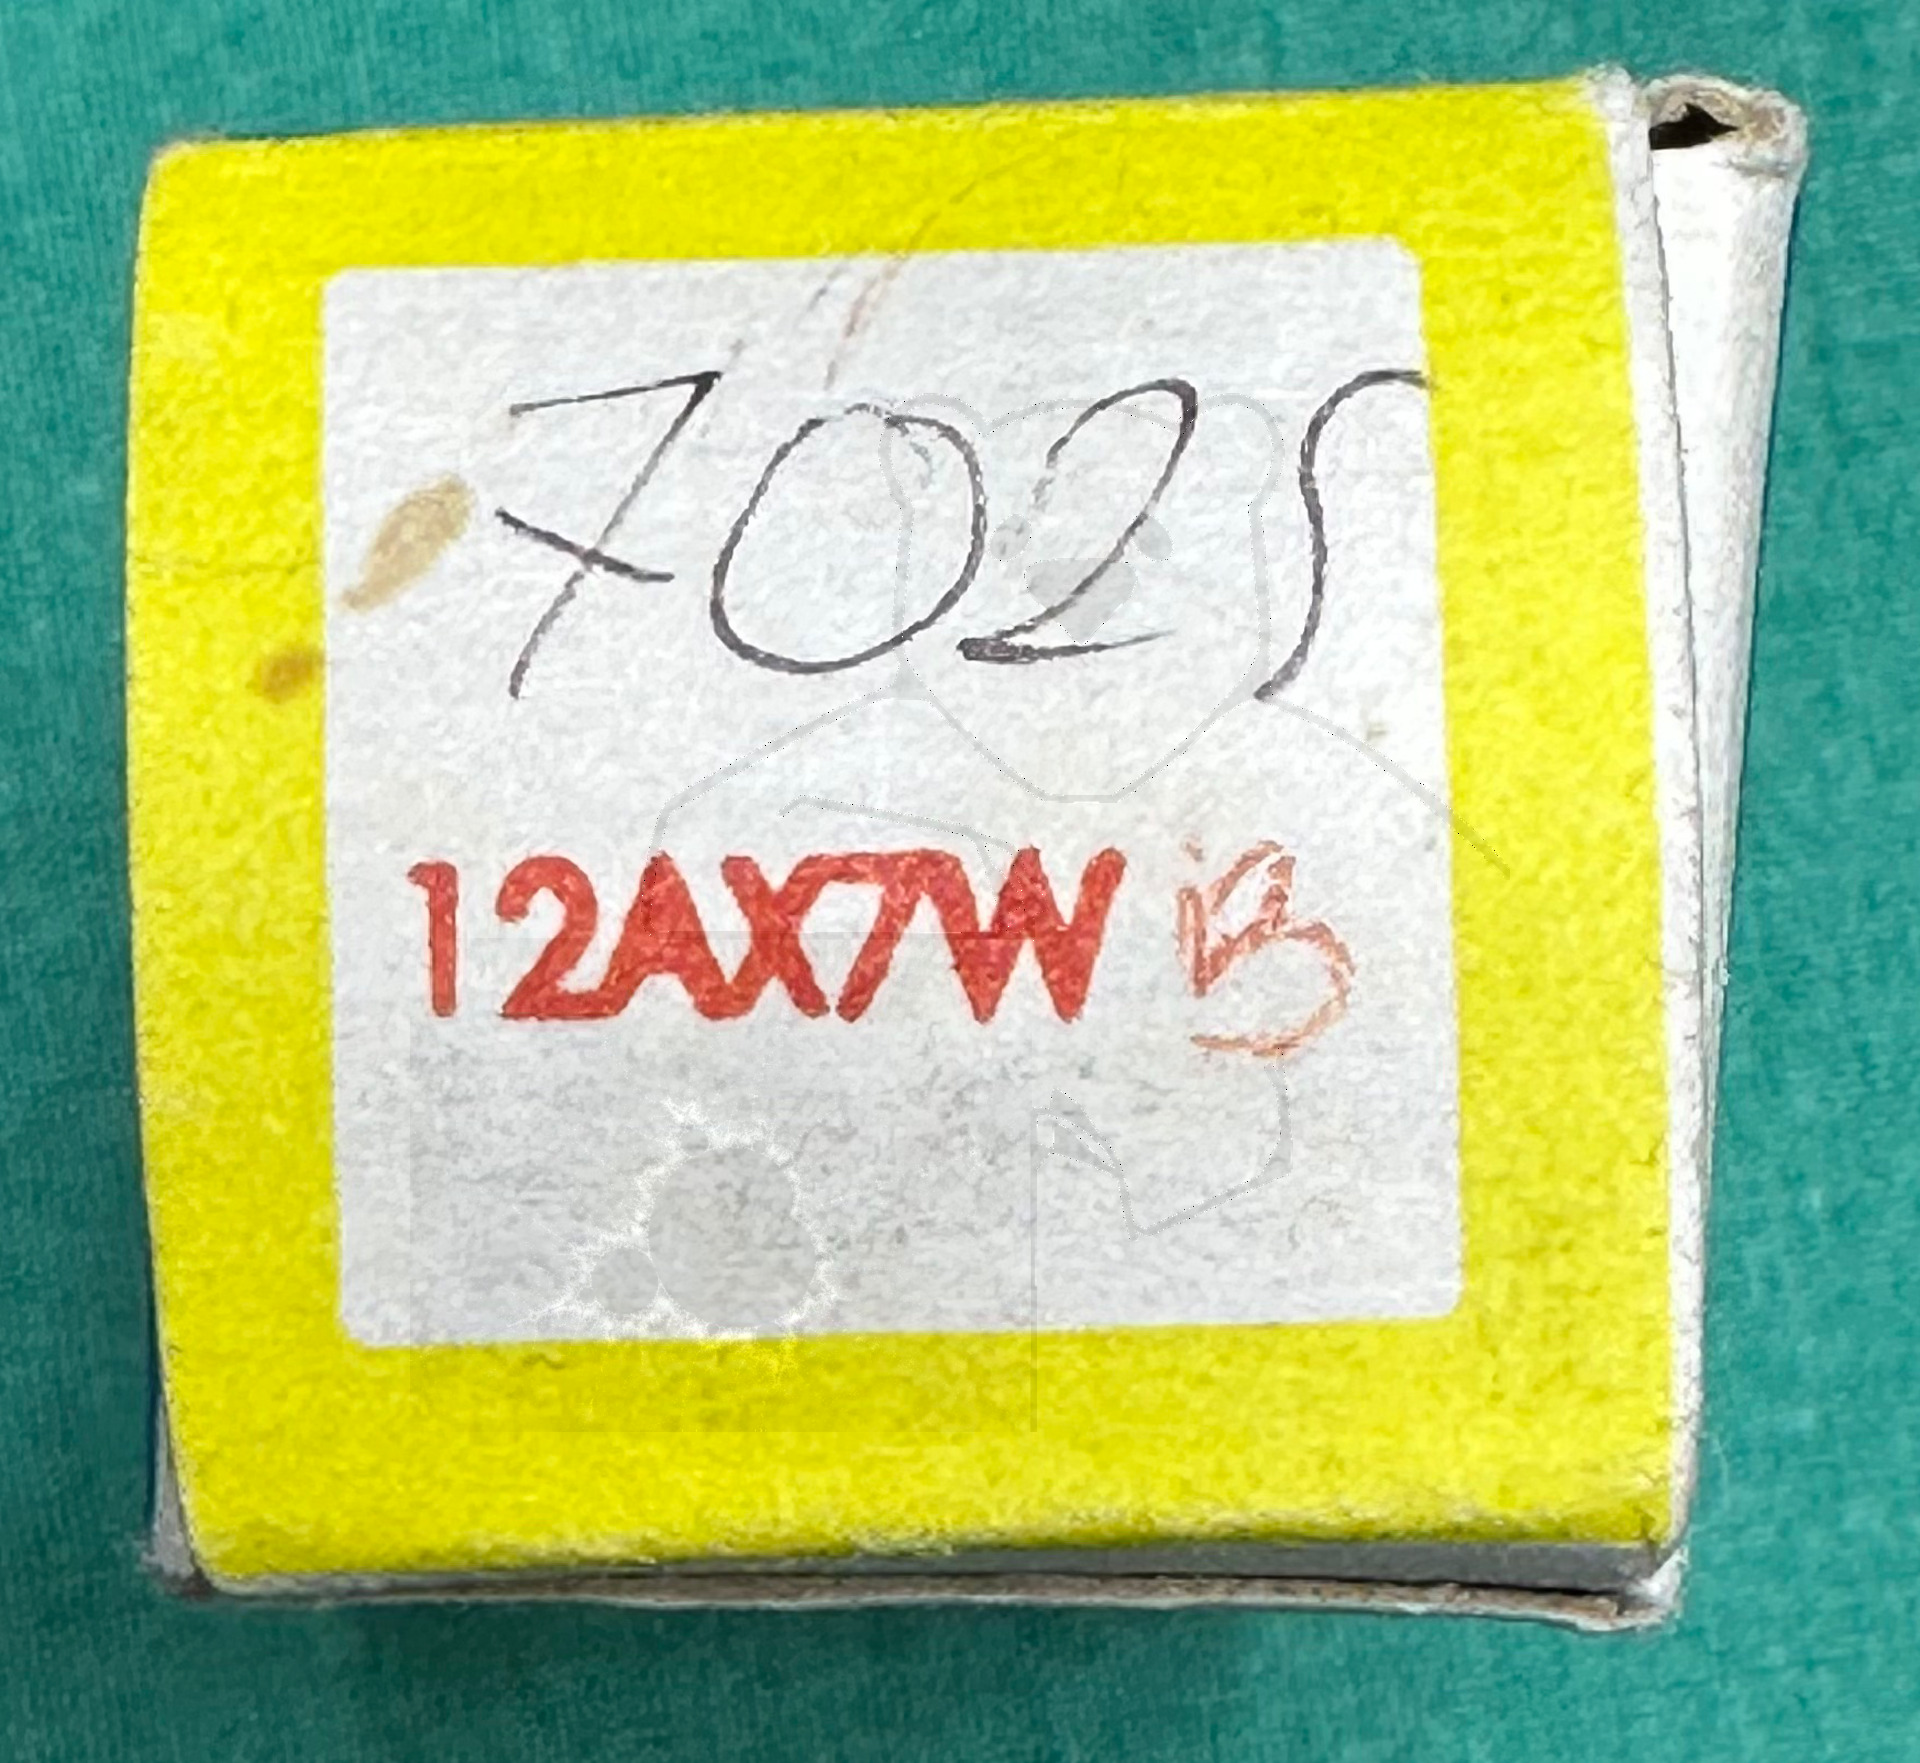 Röhre 12AX7WB #1828 Verpackung Bild 4